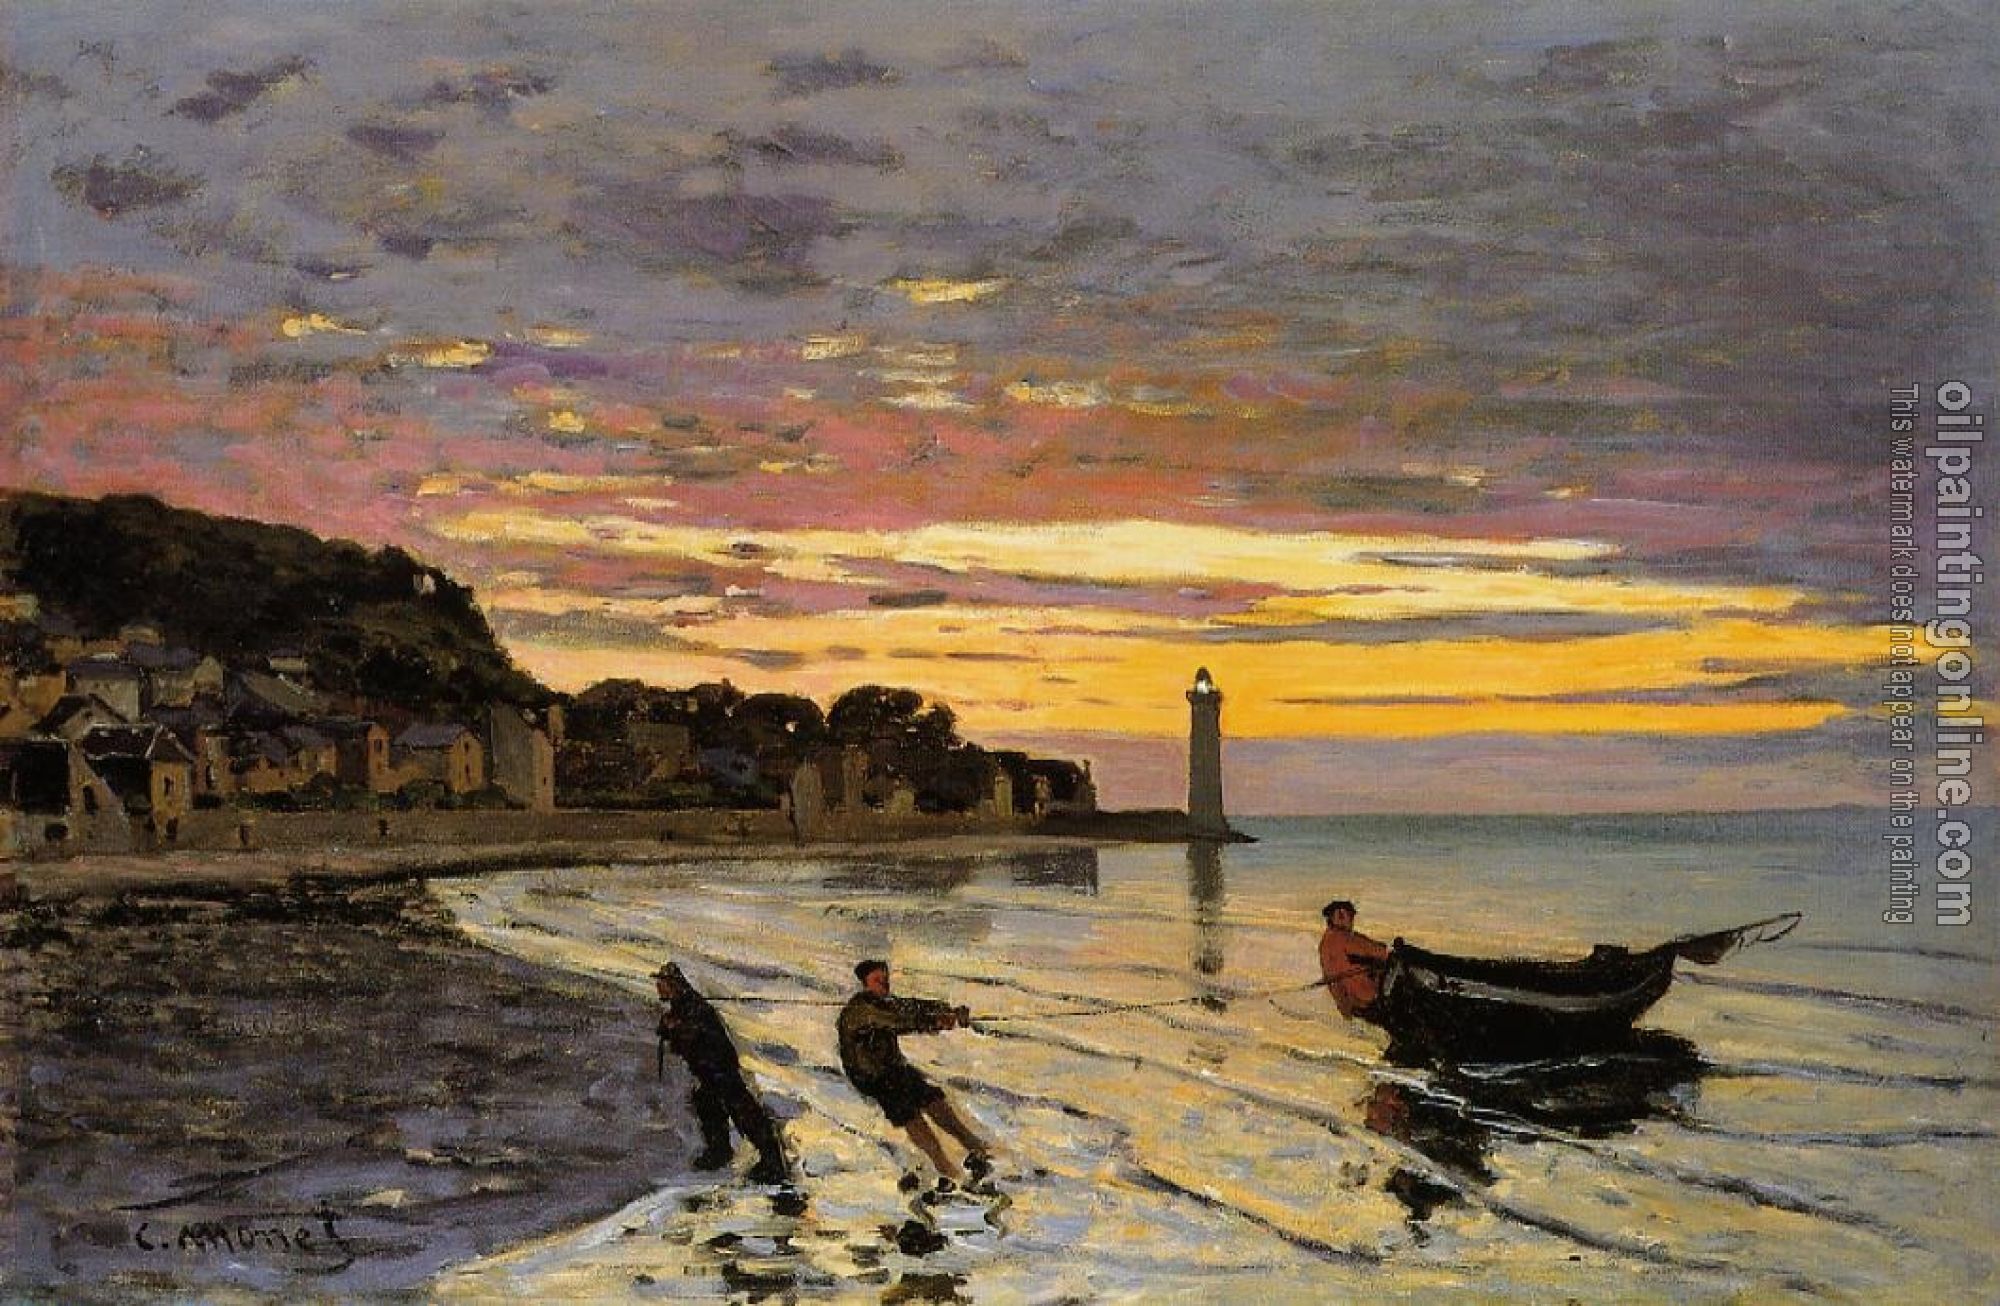 Monet, Claude Oscar - Hauling a Boat Ashore, Honfleur